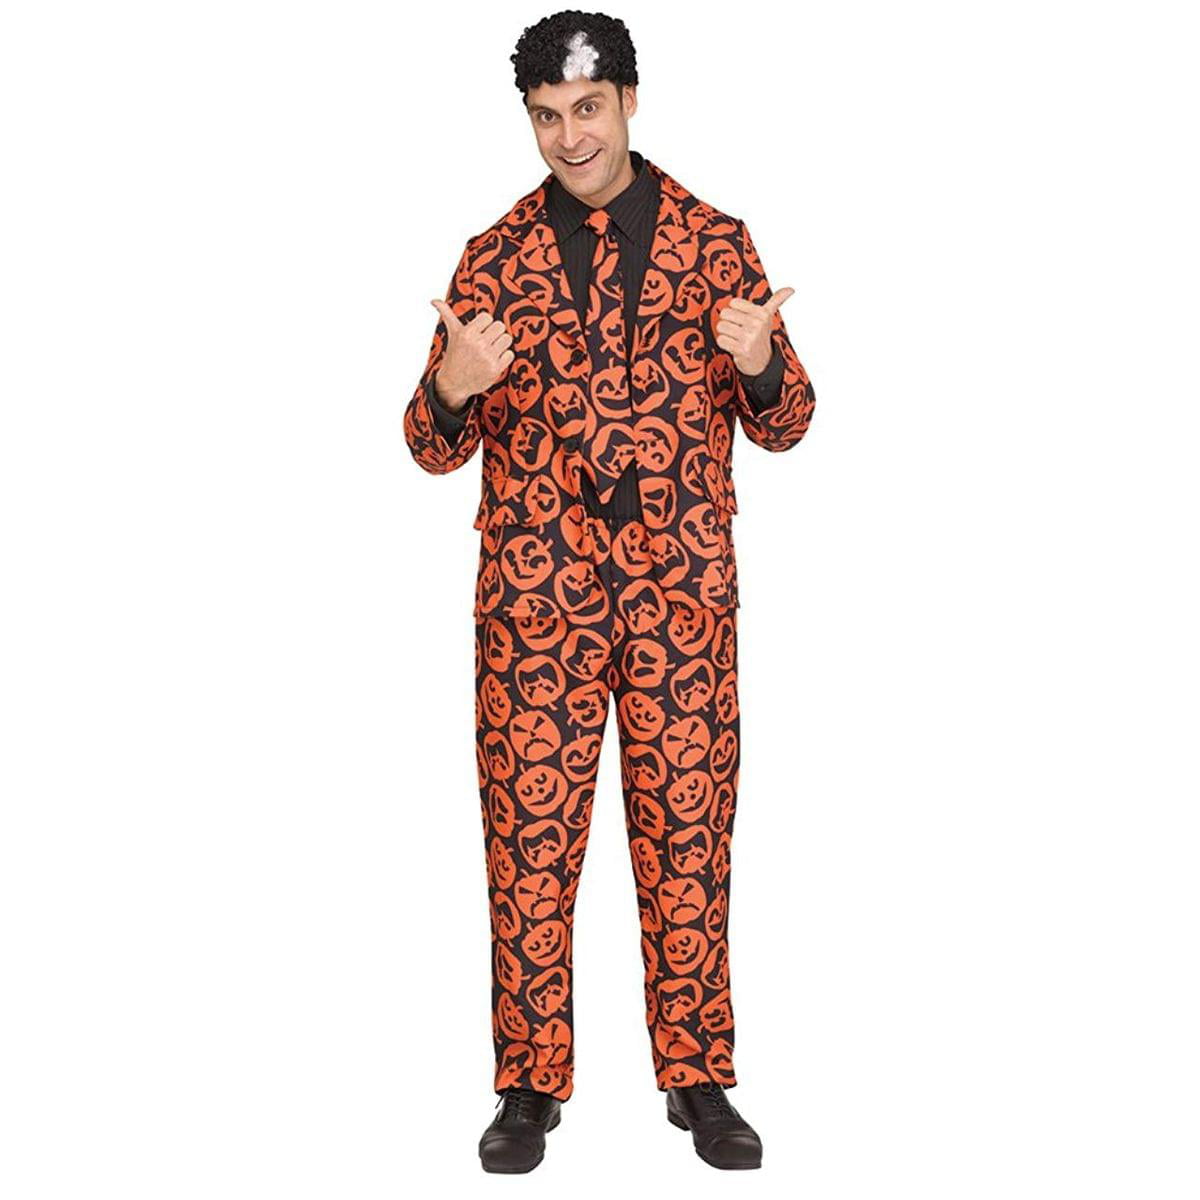 David S Pumpkins Suit Adult Costume Halloween Saturday Night Live SNL TV Show 